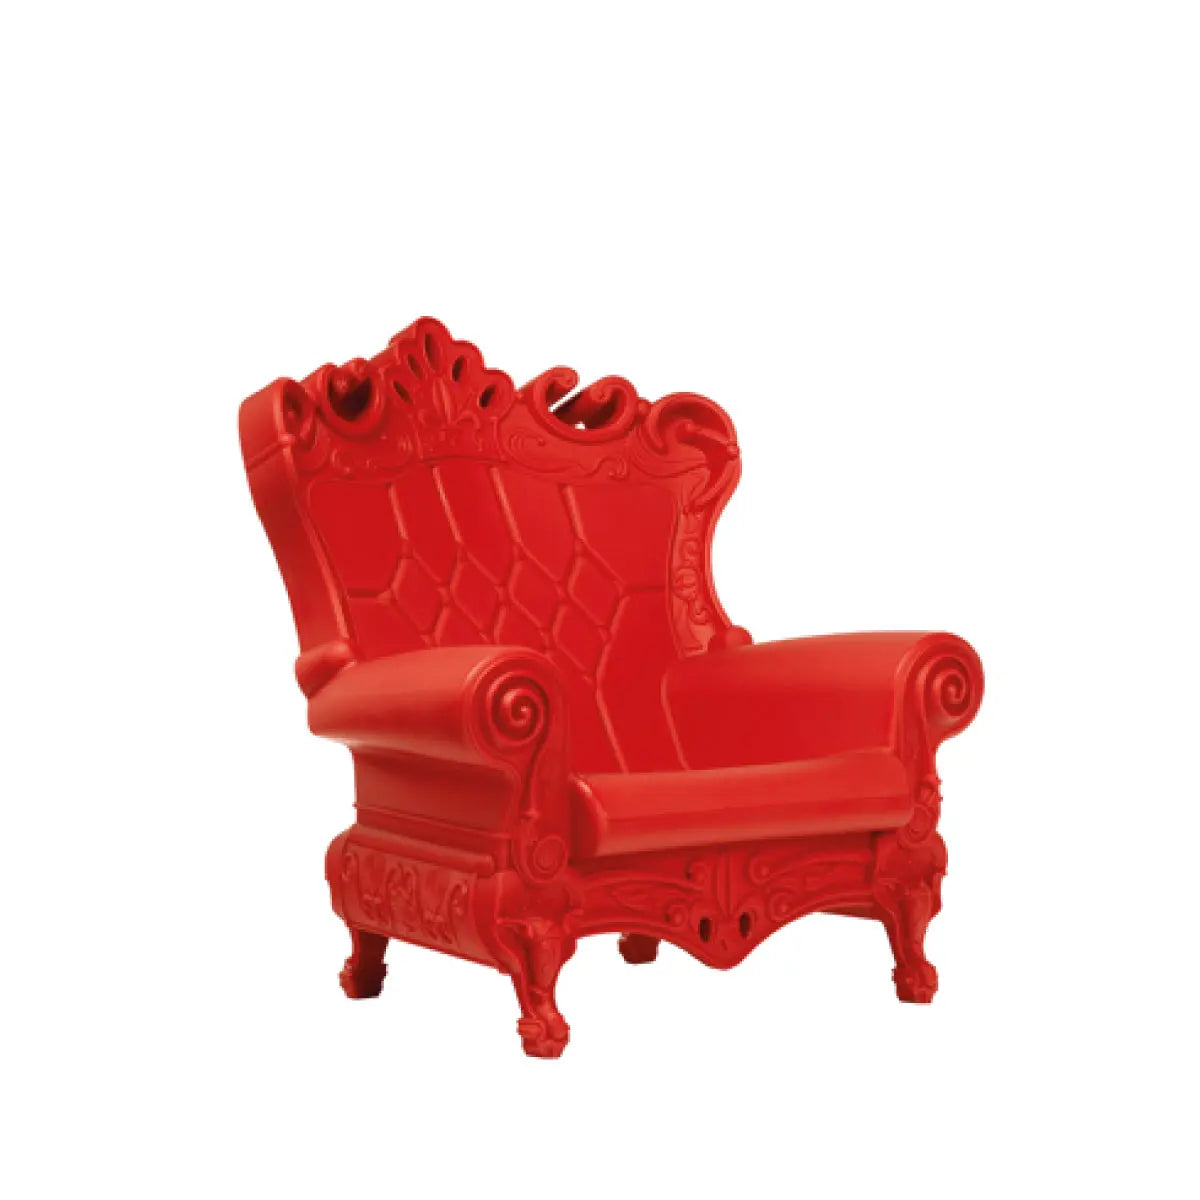 Queen of love lounge chair red Desert River Rentals